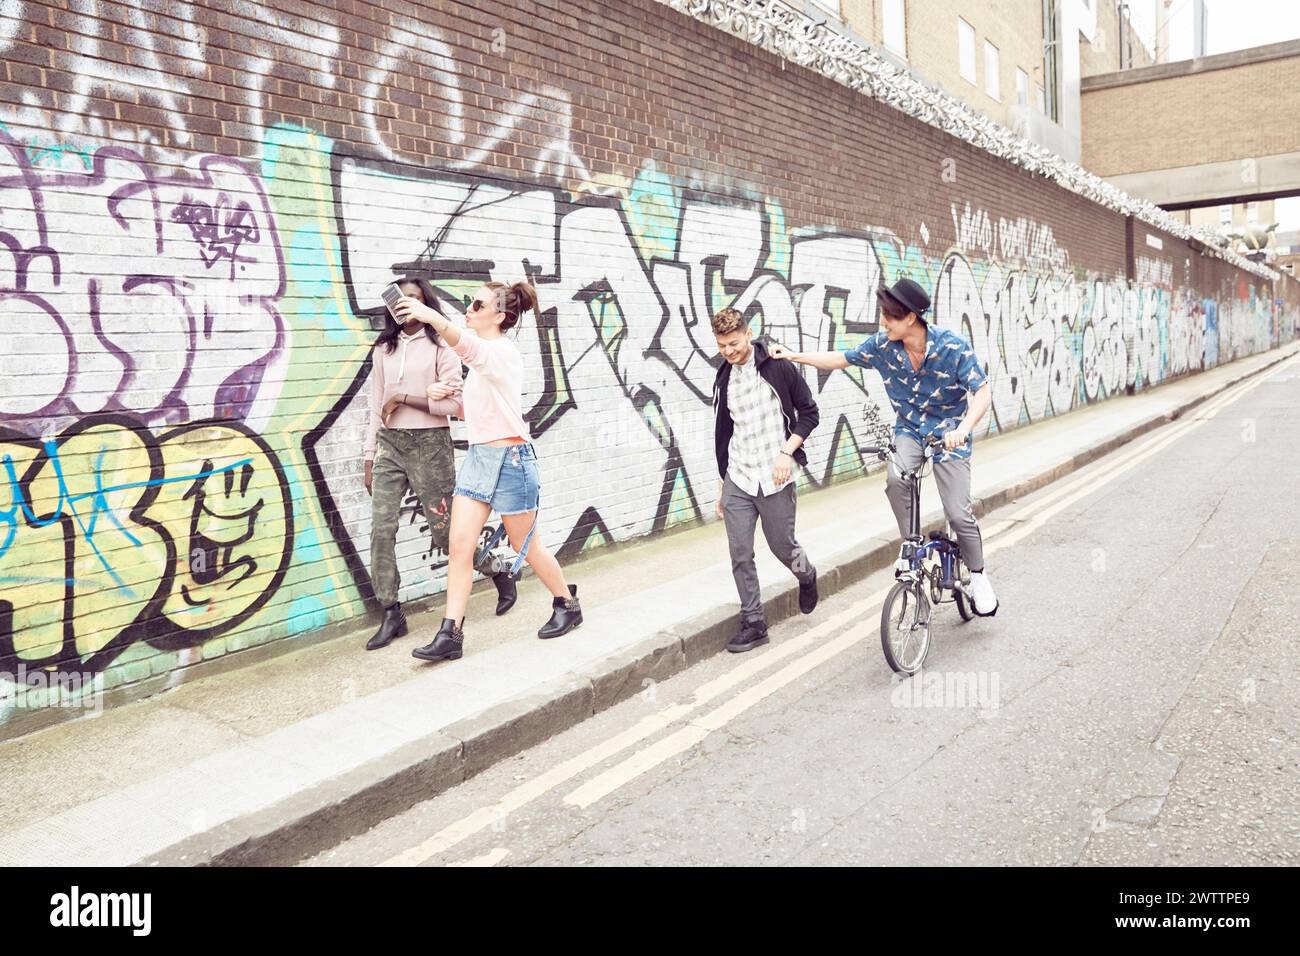 Group of friends having fun near a graffiti wall Stock Photo